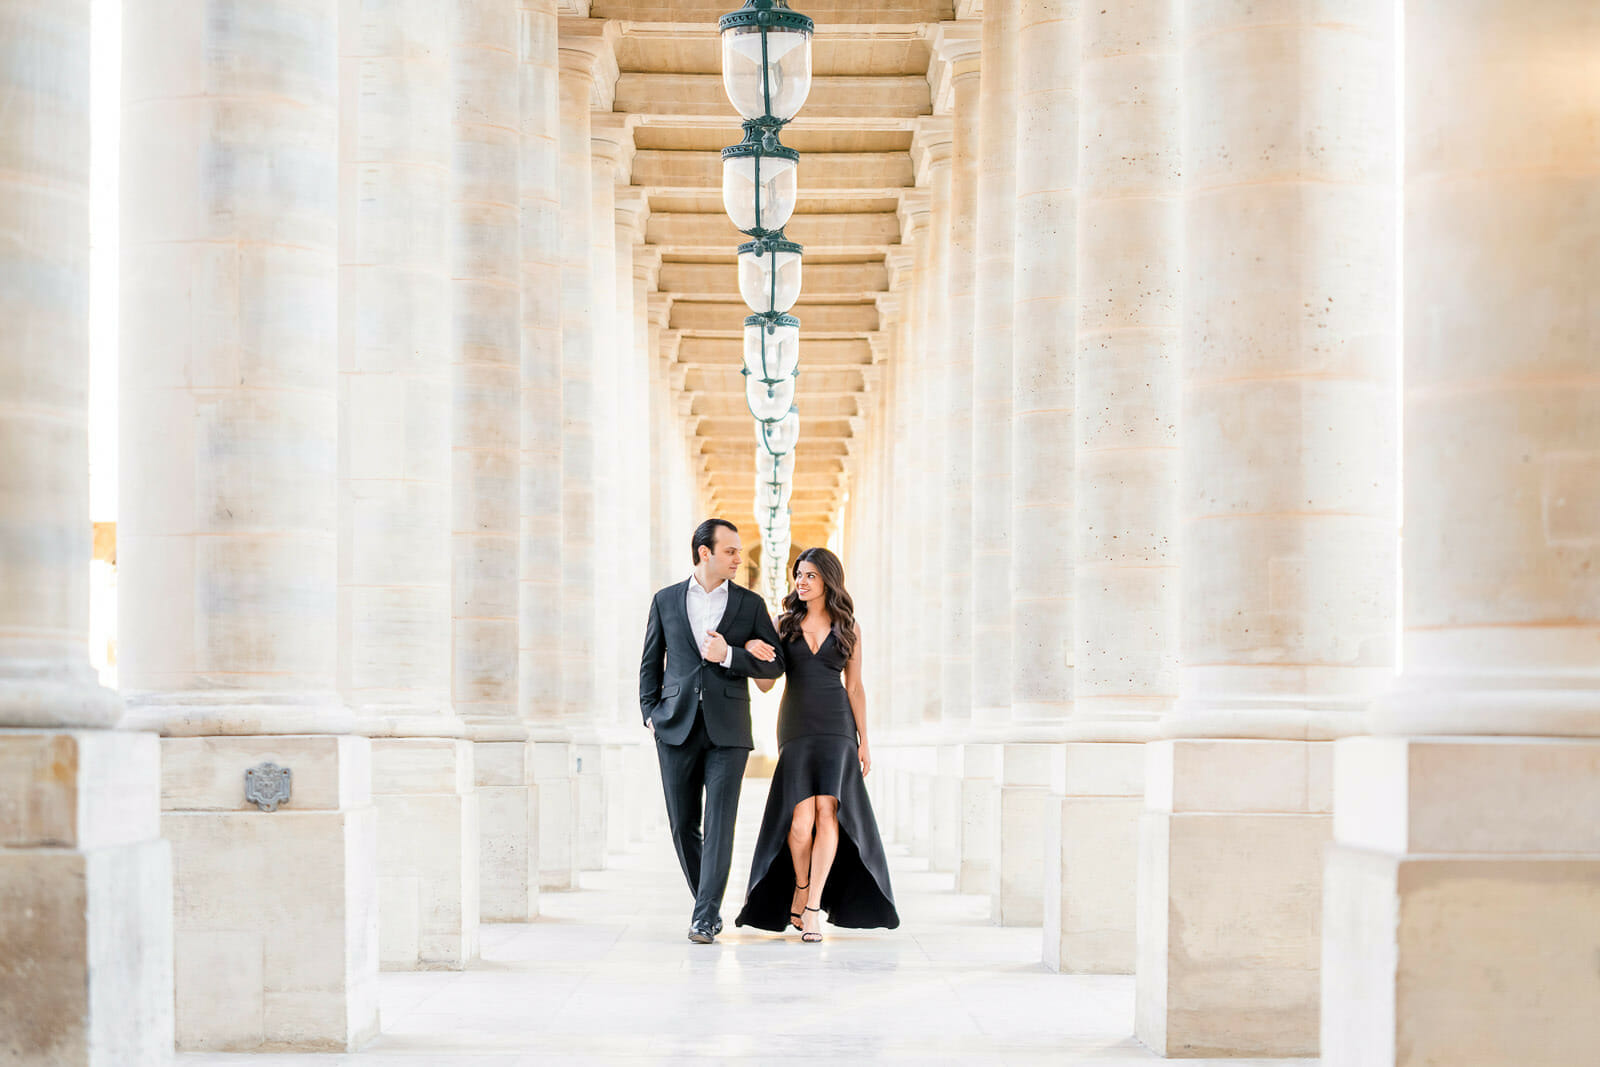 Elegant Paris anniversary photos at Palais Royal